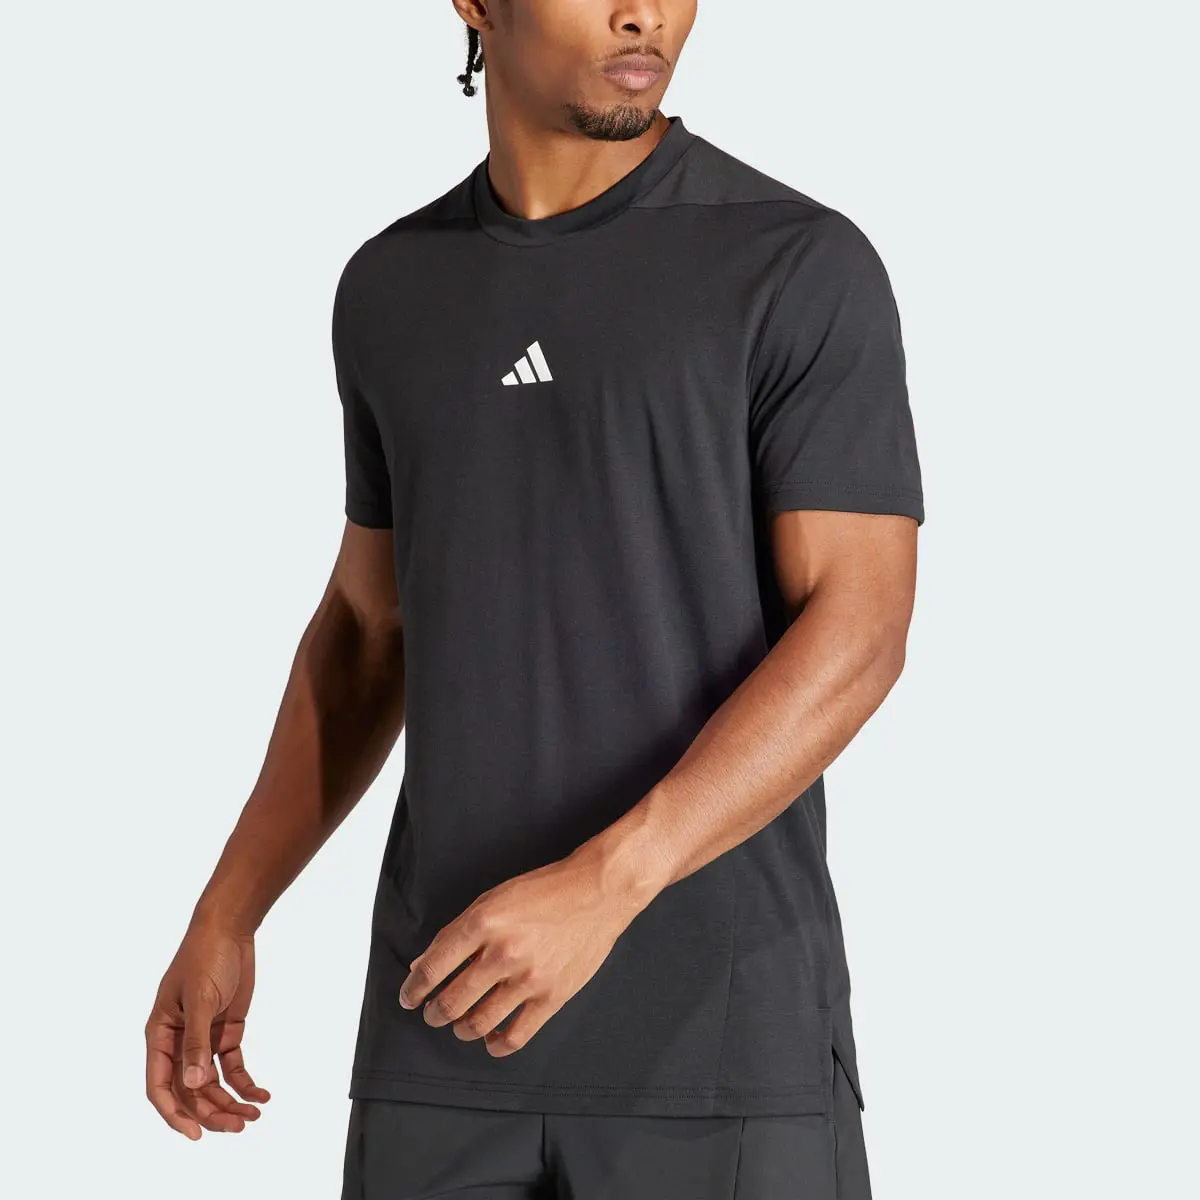 Adidas T-shirt Designed for Training. 1